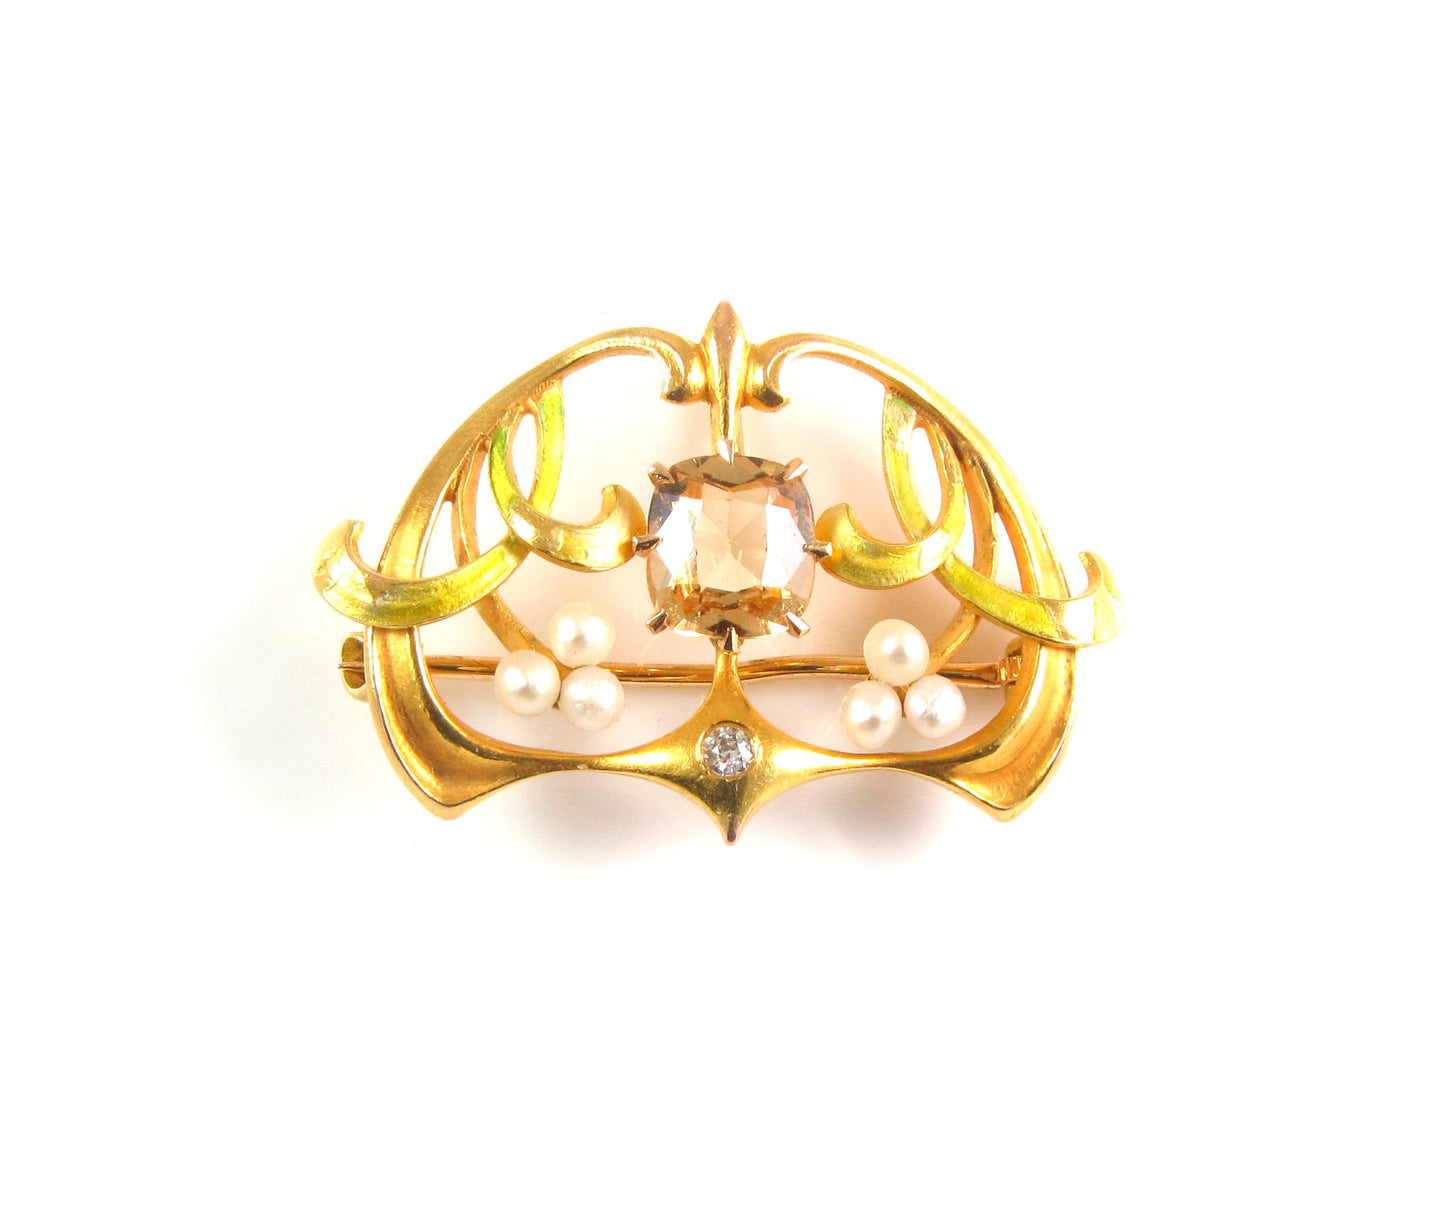 Antique 14k Gold Art Nouveau Krementz Enamel Citrine Pearl Brooch Watch Pin